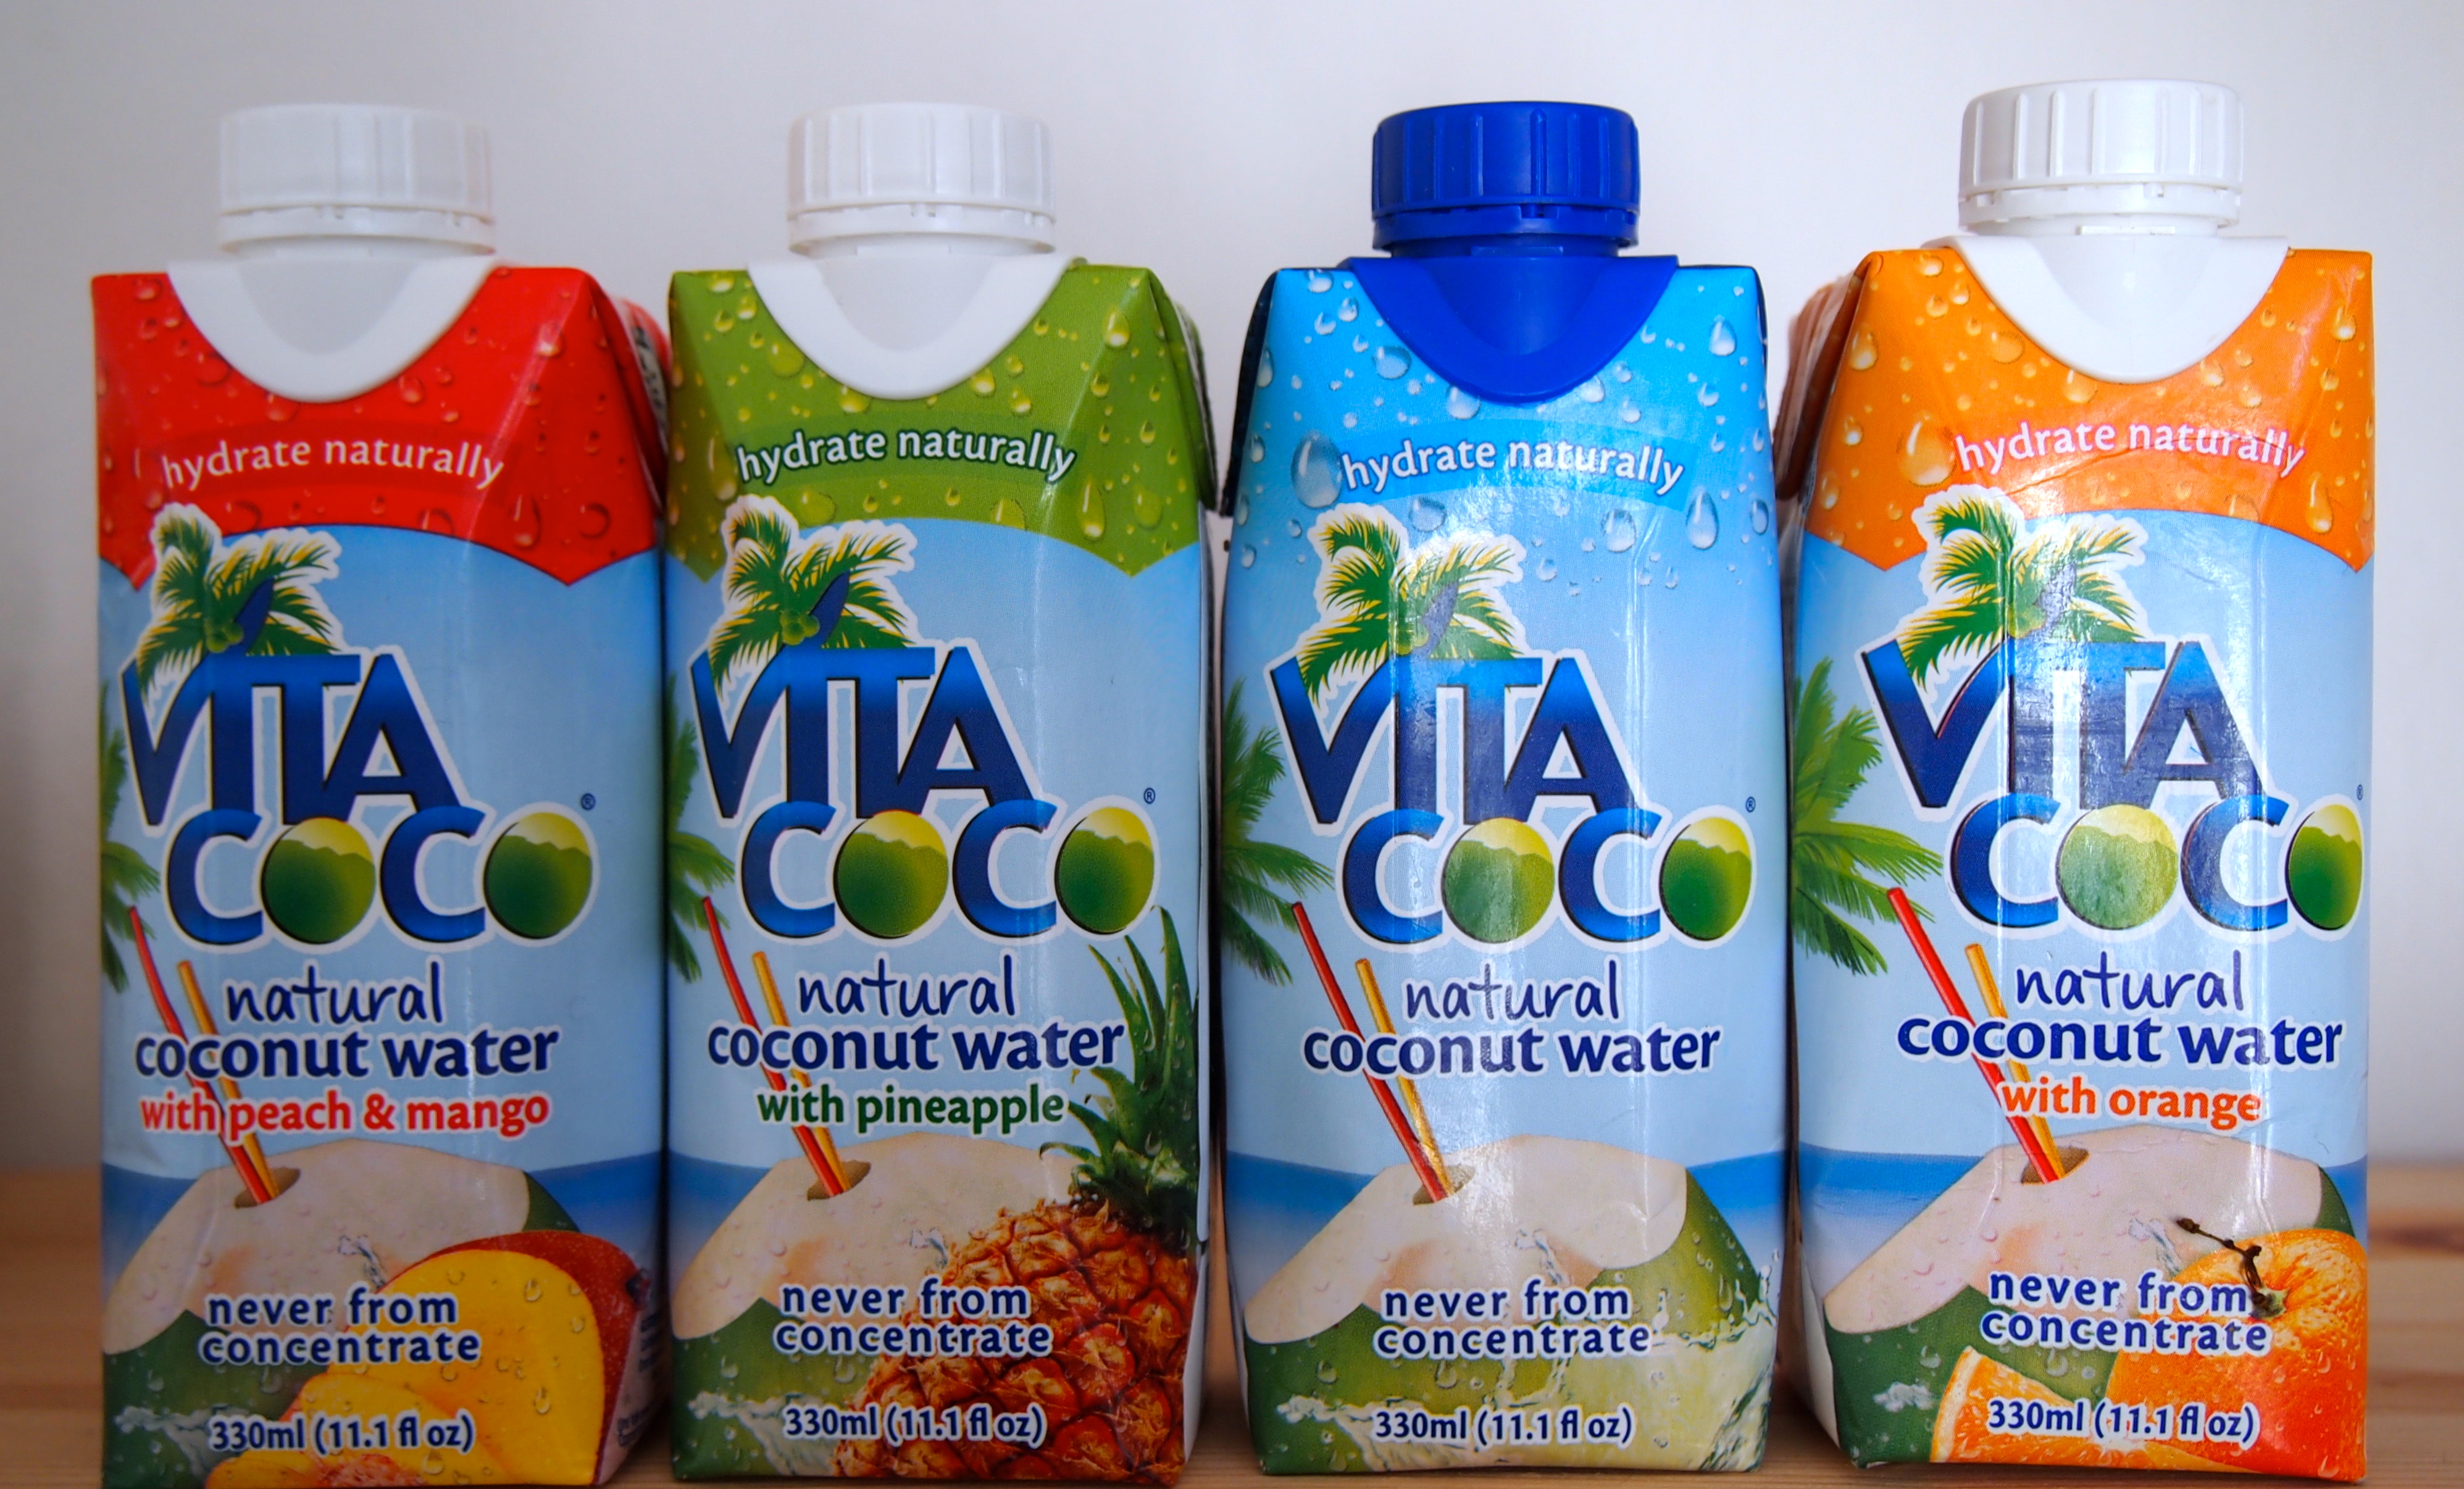 koffie informatie erven Vita Coco kokoswater | De Groene Meisjes